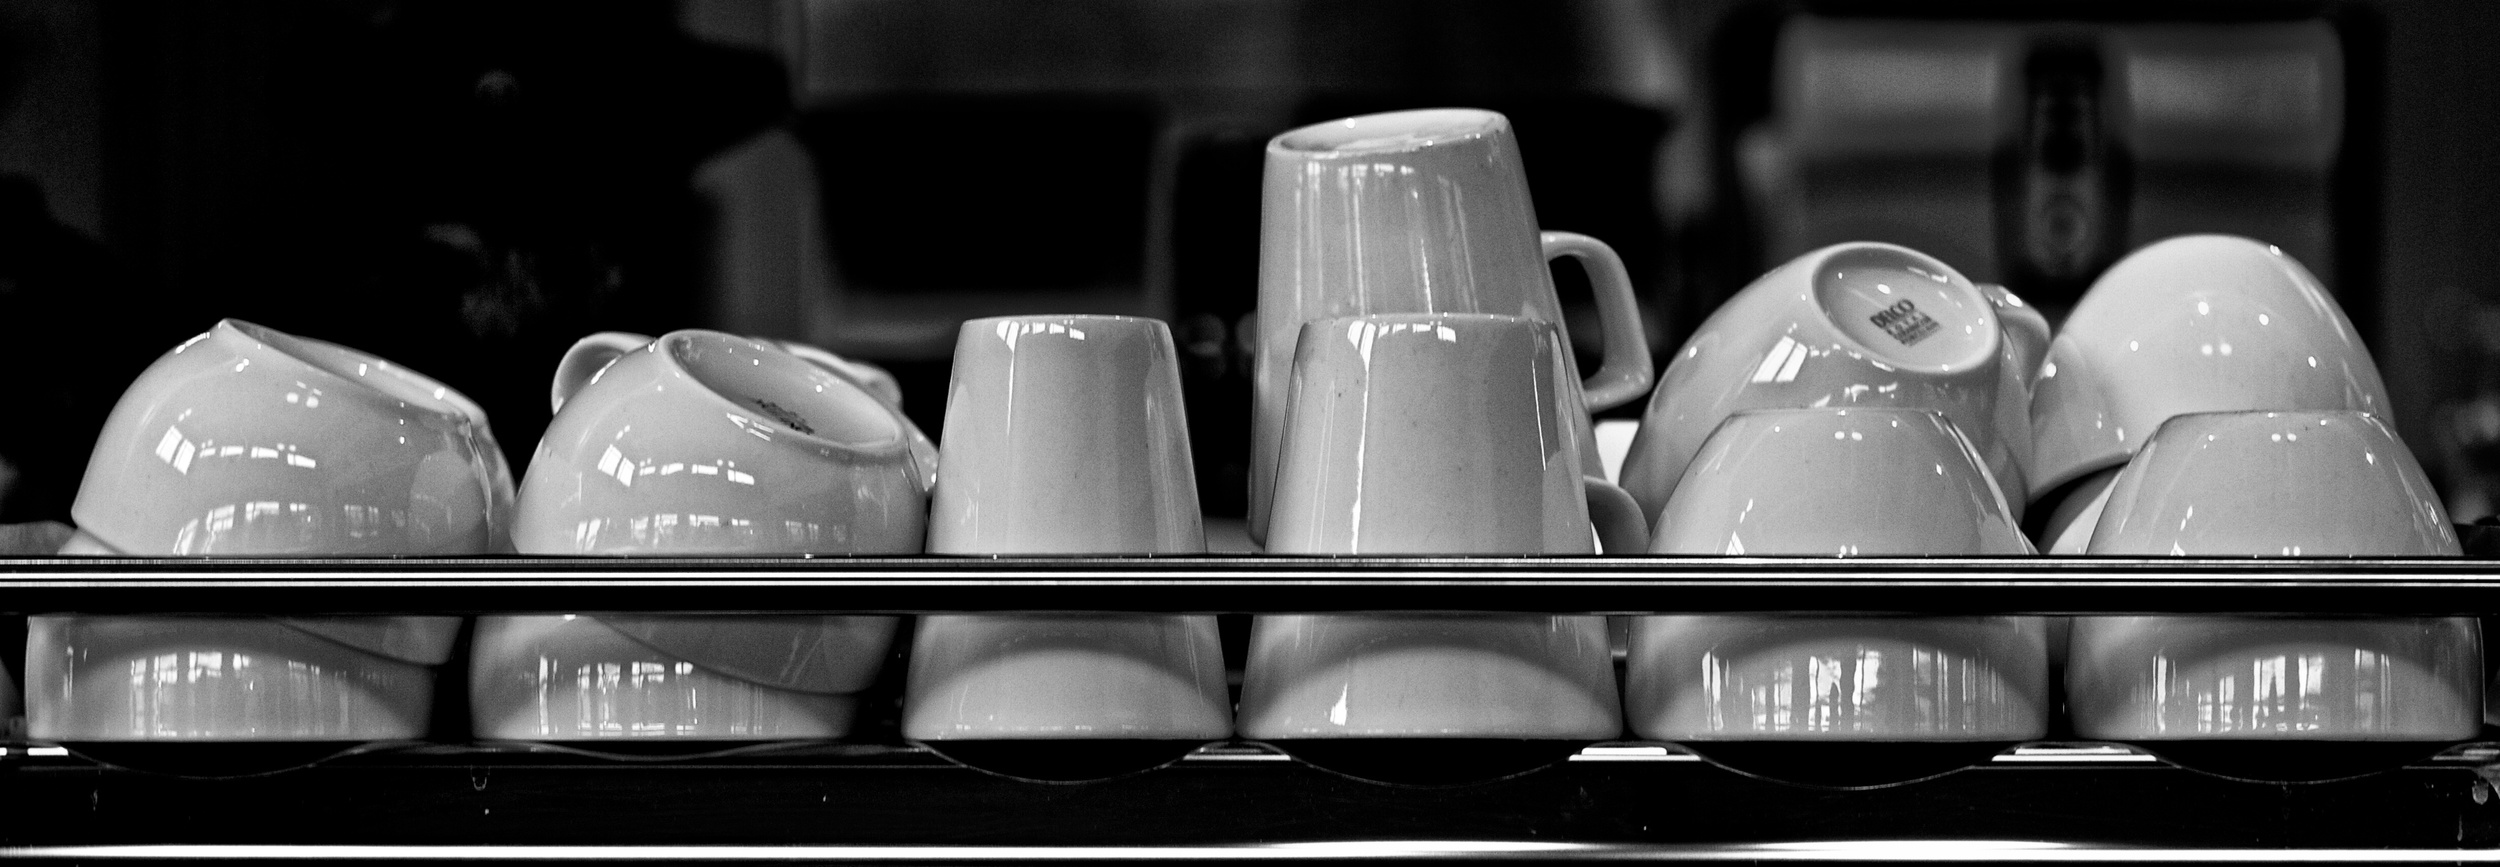 2013-03-23 at 08-51-43 Black & White, Coffee, Cup, Mug, Shop, Stack, Still Life.jpg